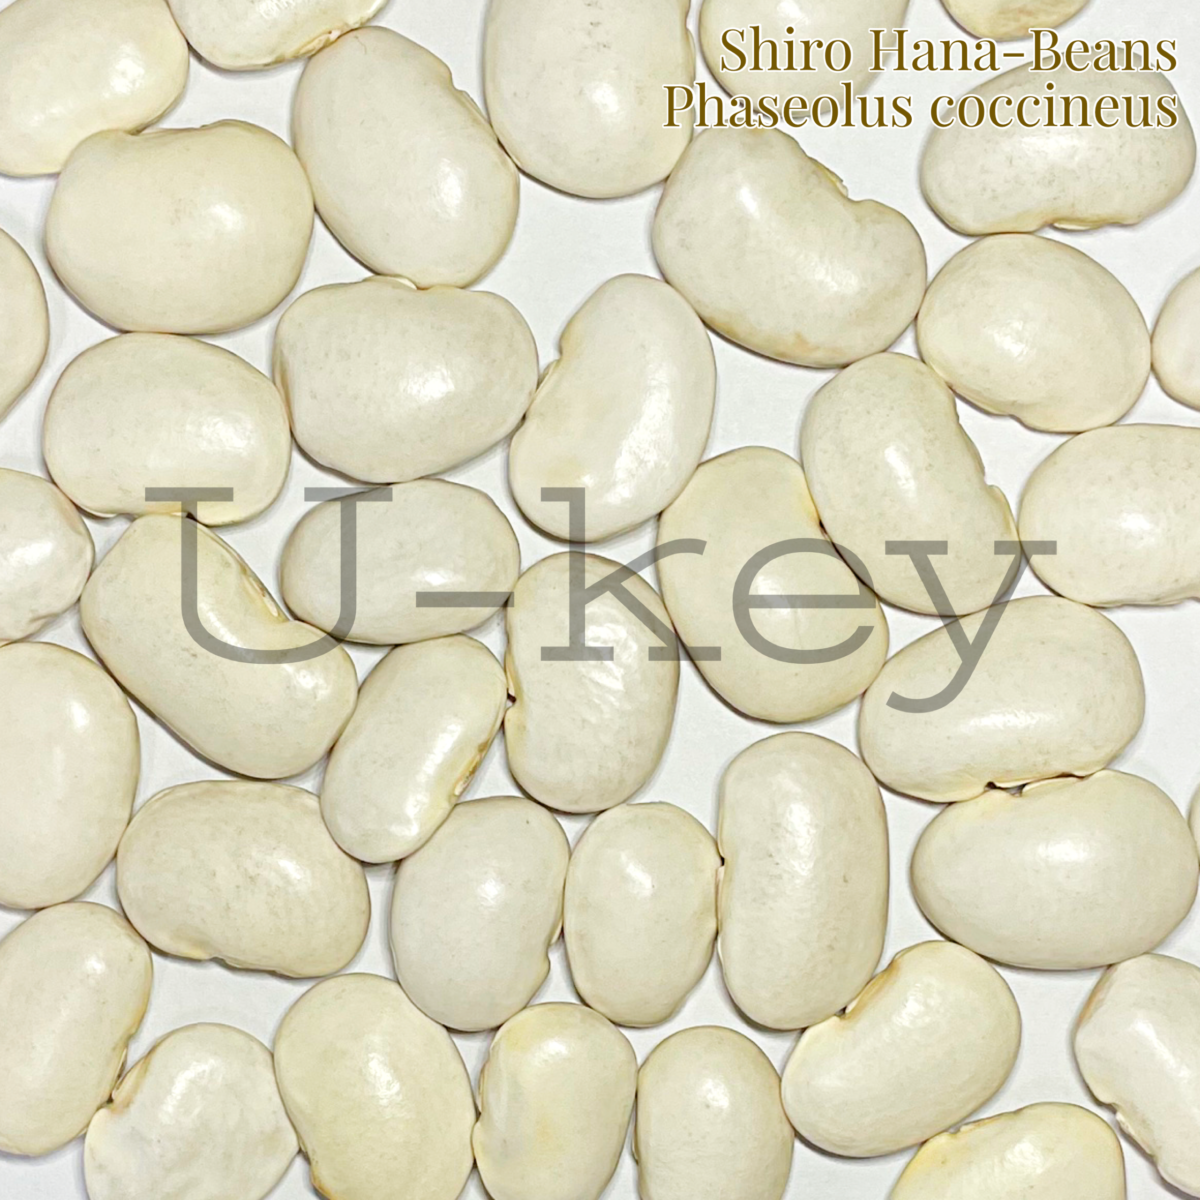 Shiro Hana-Beans,Phascolus coccineus